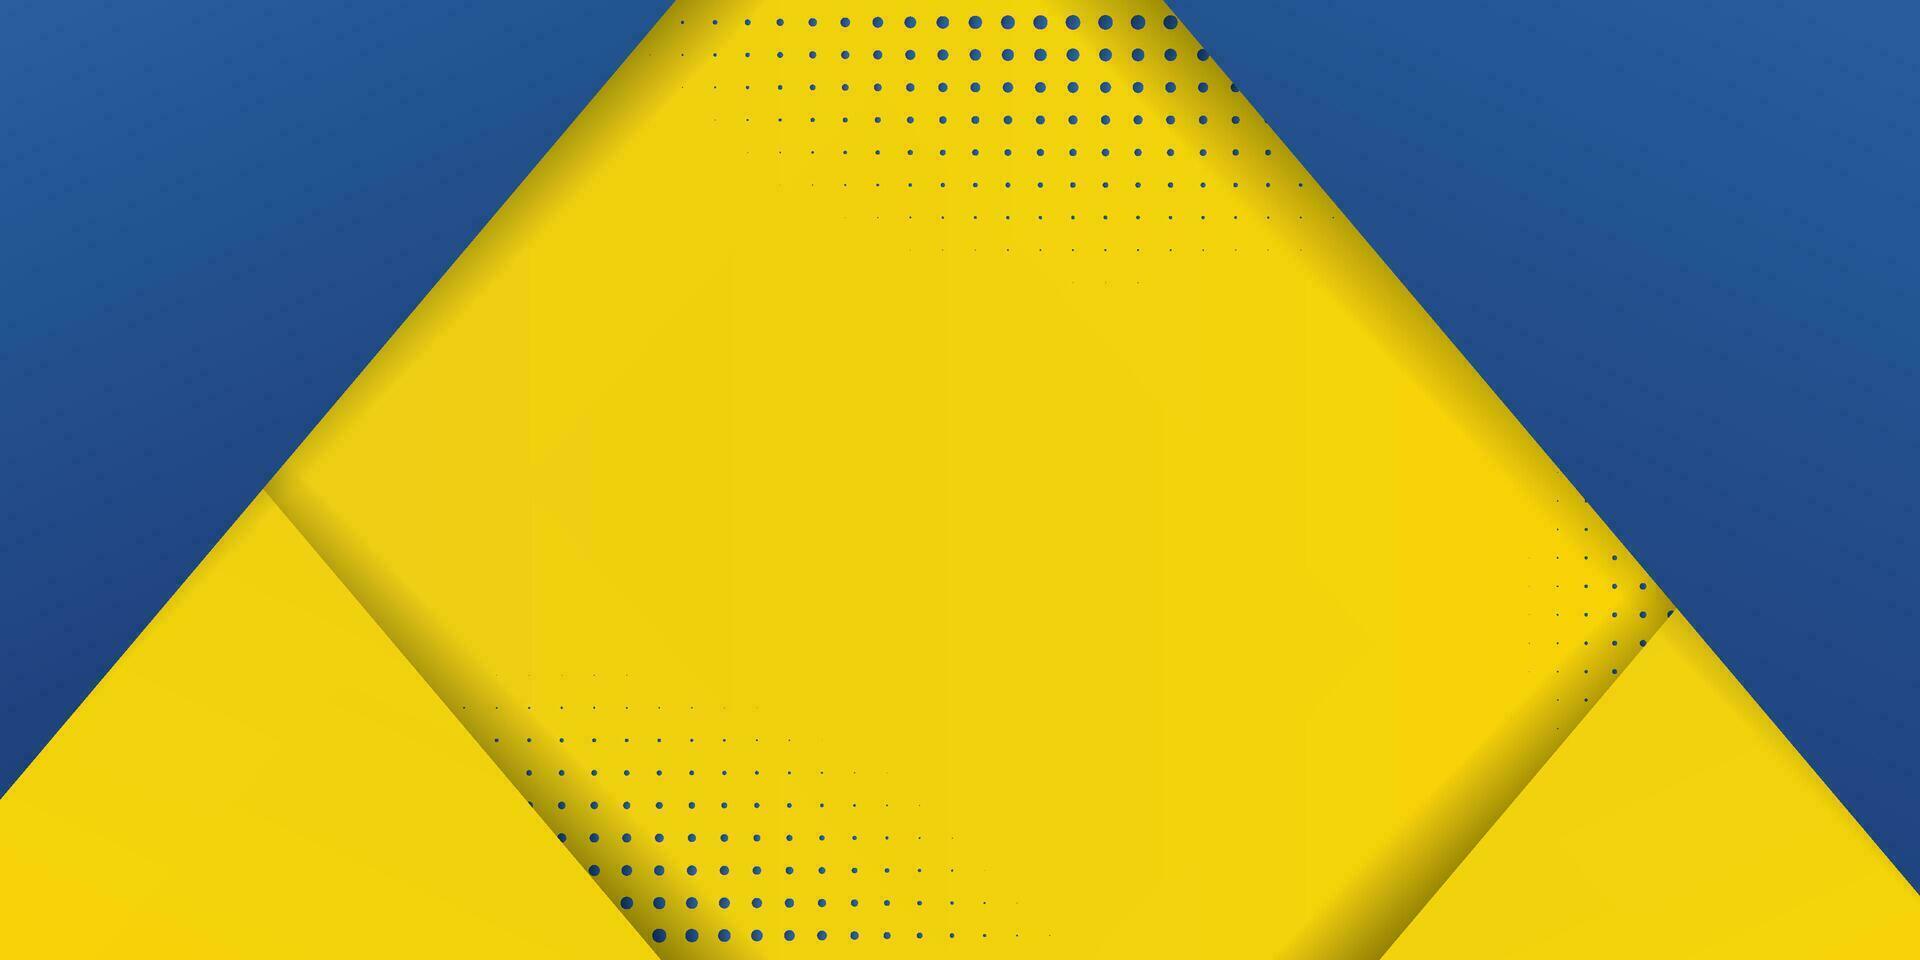 abstract achtergrond modern hipster futuristische grafisch. geel achtergrond met strepen. vector abstract achtergrond structuur ontwerp, helder poster, banier geel en blauw achtergrond vector illustratie.